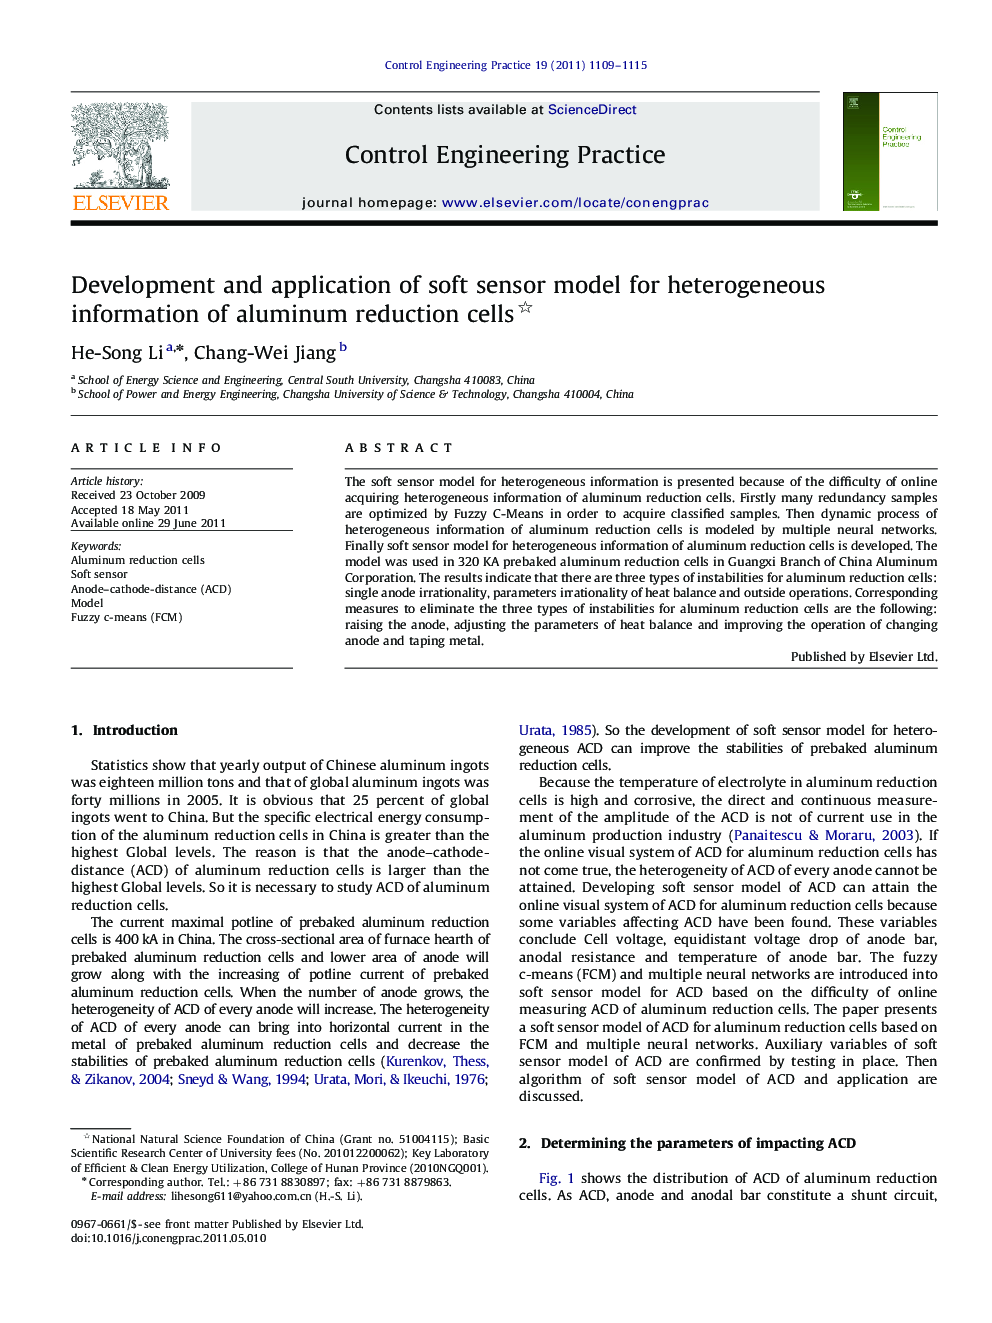 Development and application of soft sensor model for heterogeneous information of aluminum reduction cells 